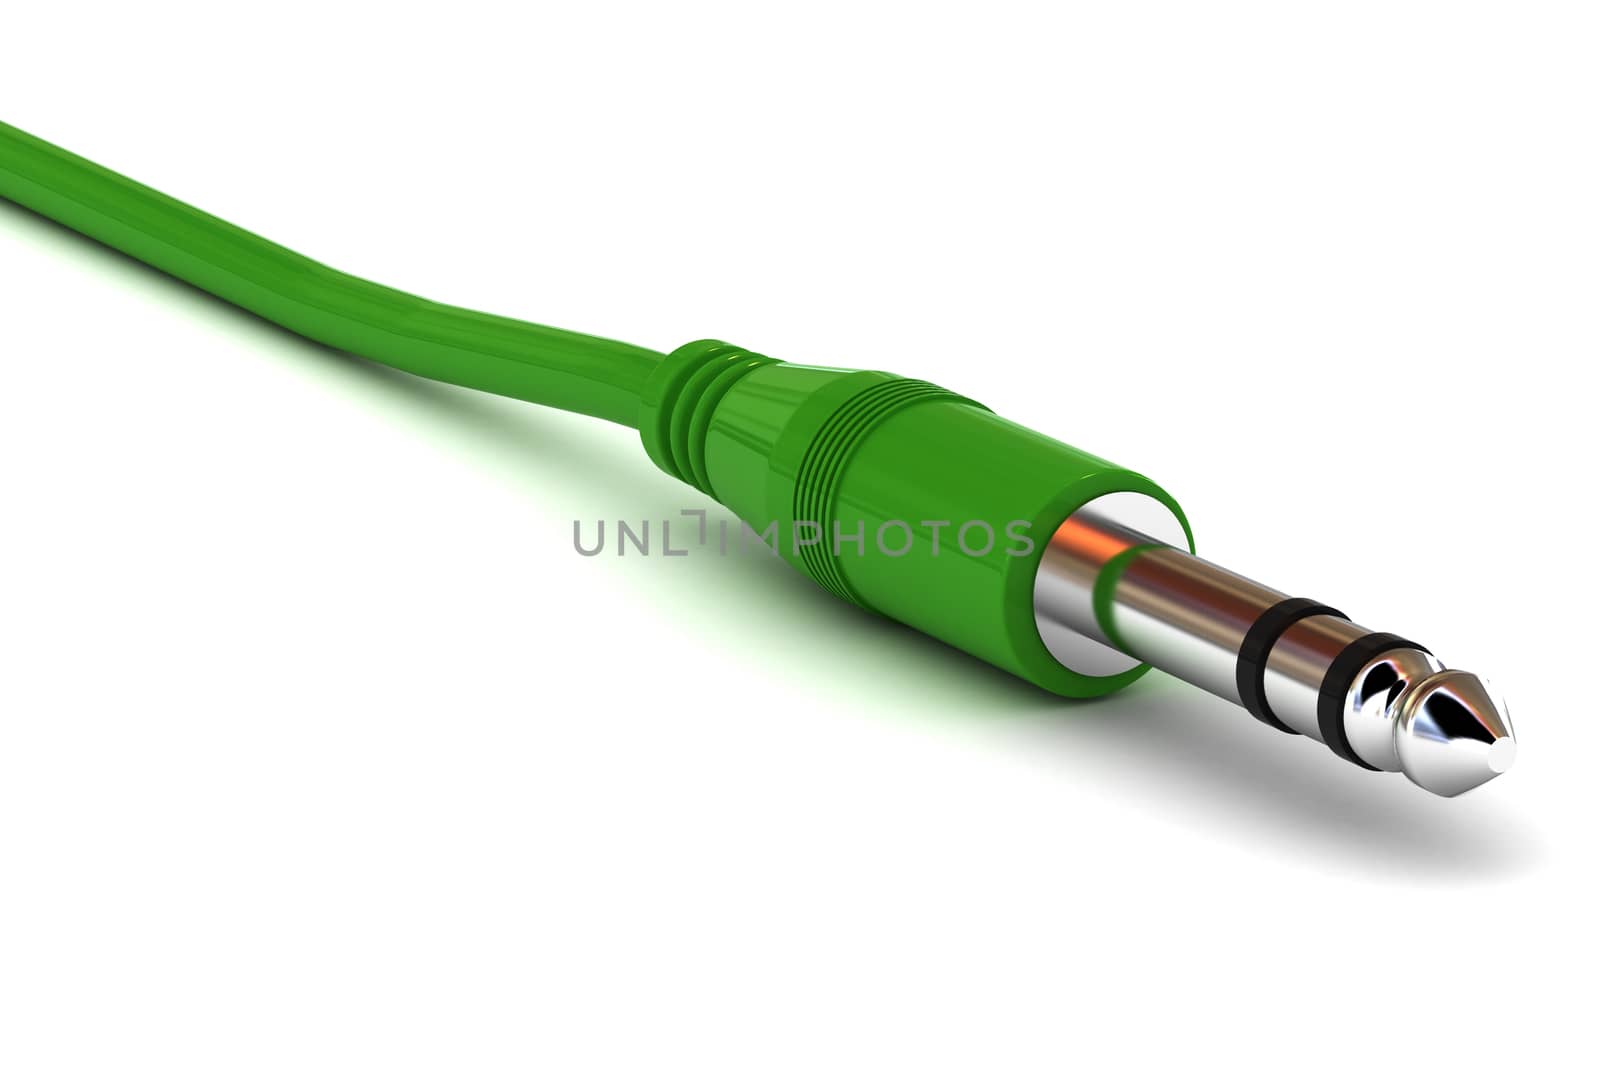 A Colourful 3d Rendered Illustration of a Jack Plug